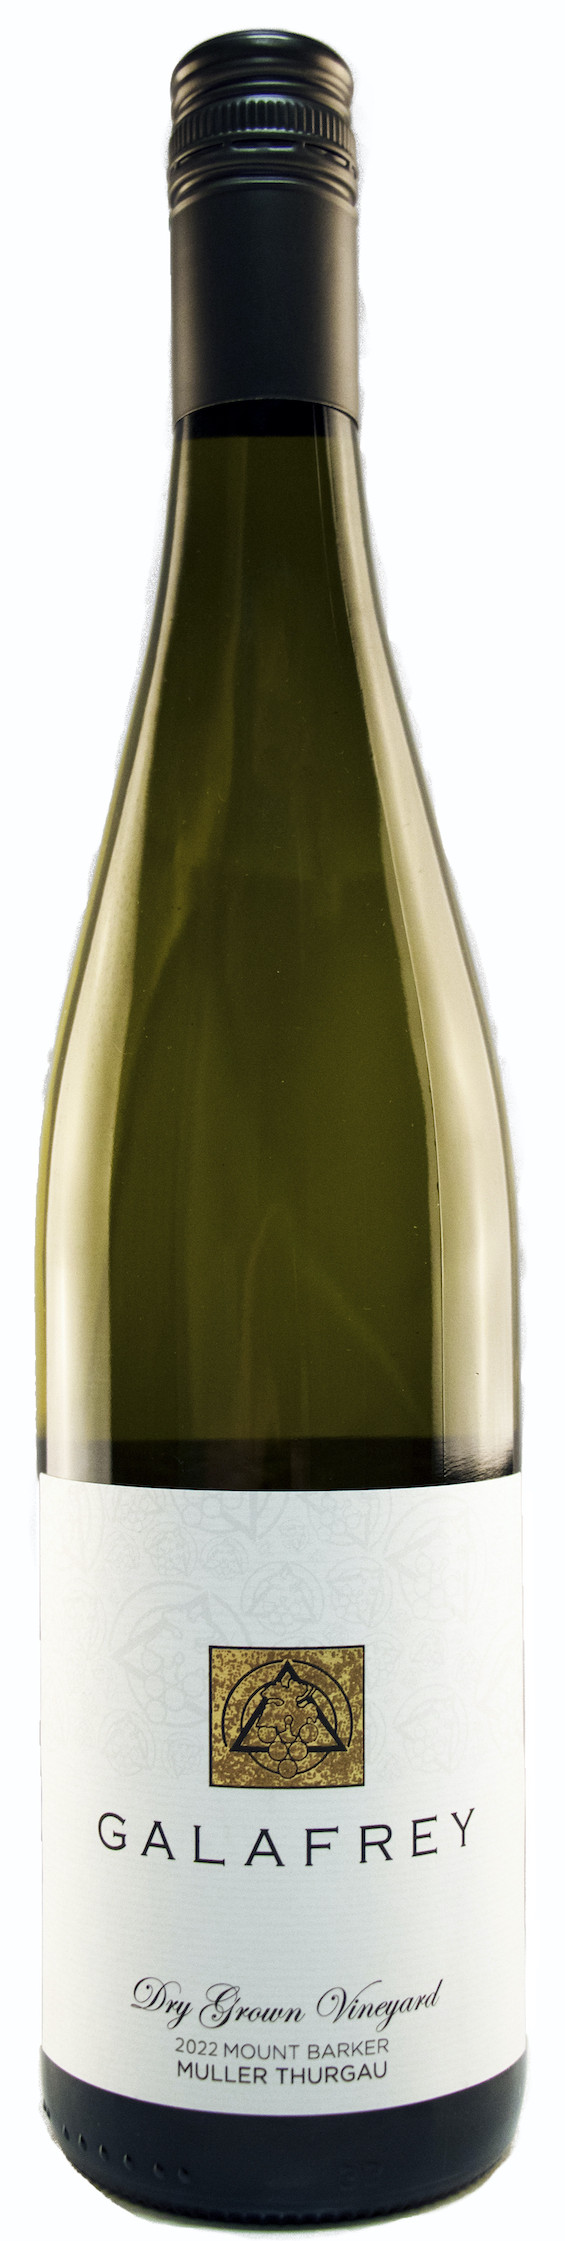 Wine Bottle for Galafrey Dry Grown Vineyard Muller Thurgau